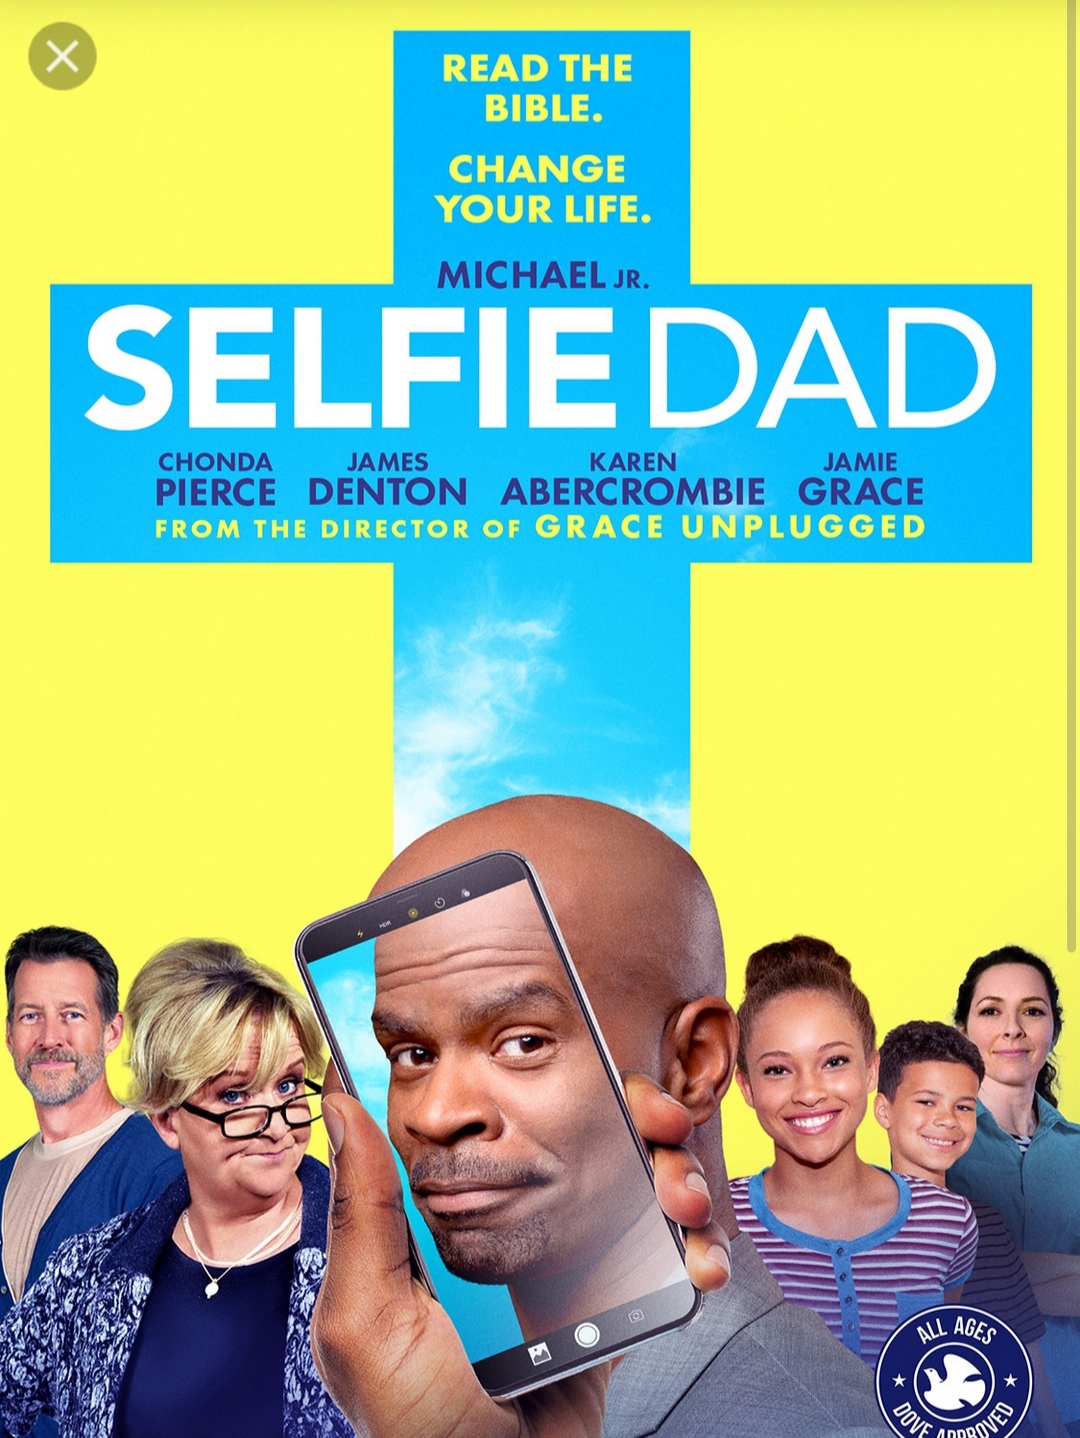 Tonight's Movie: Selfie Dad